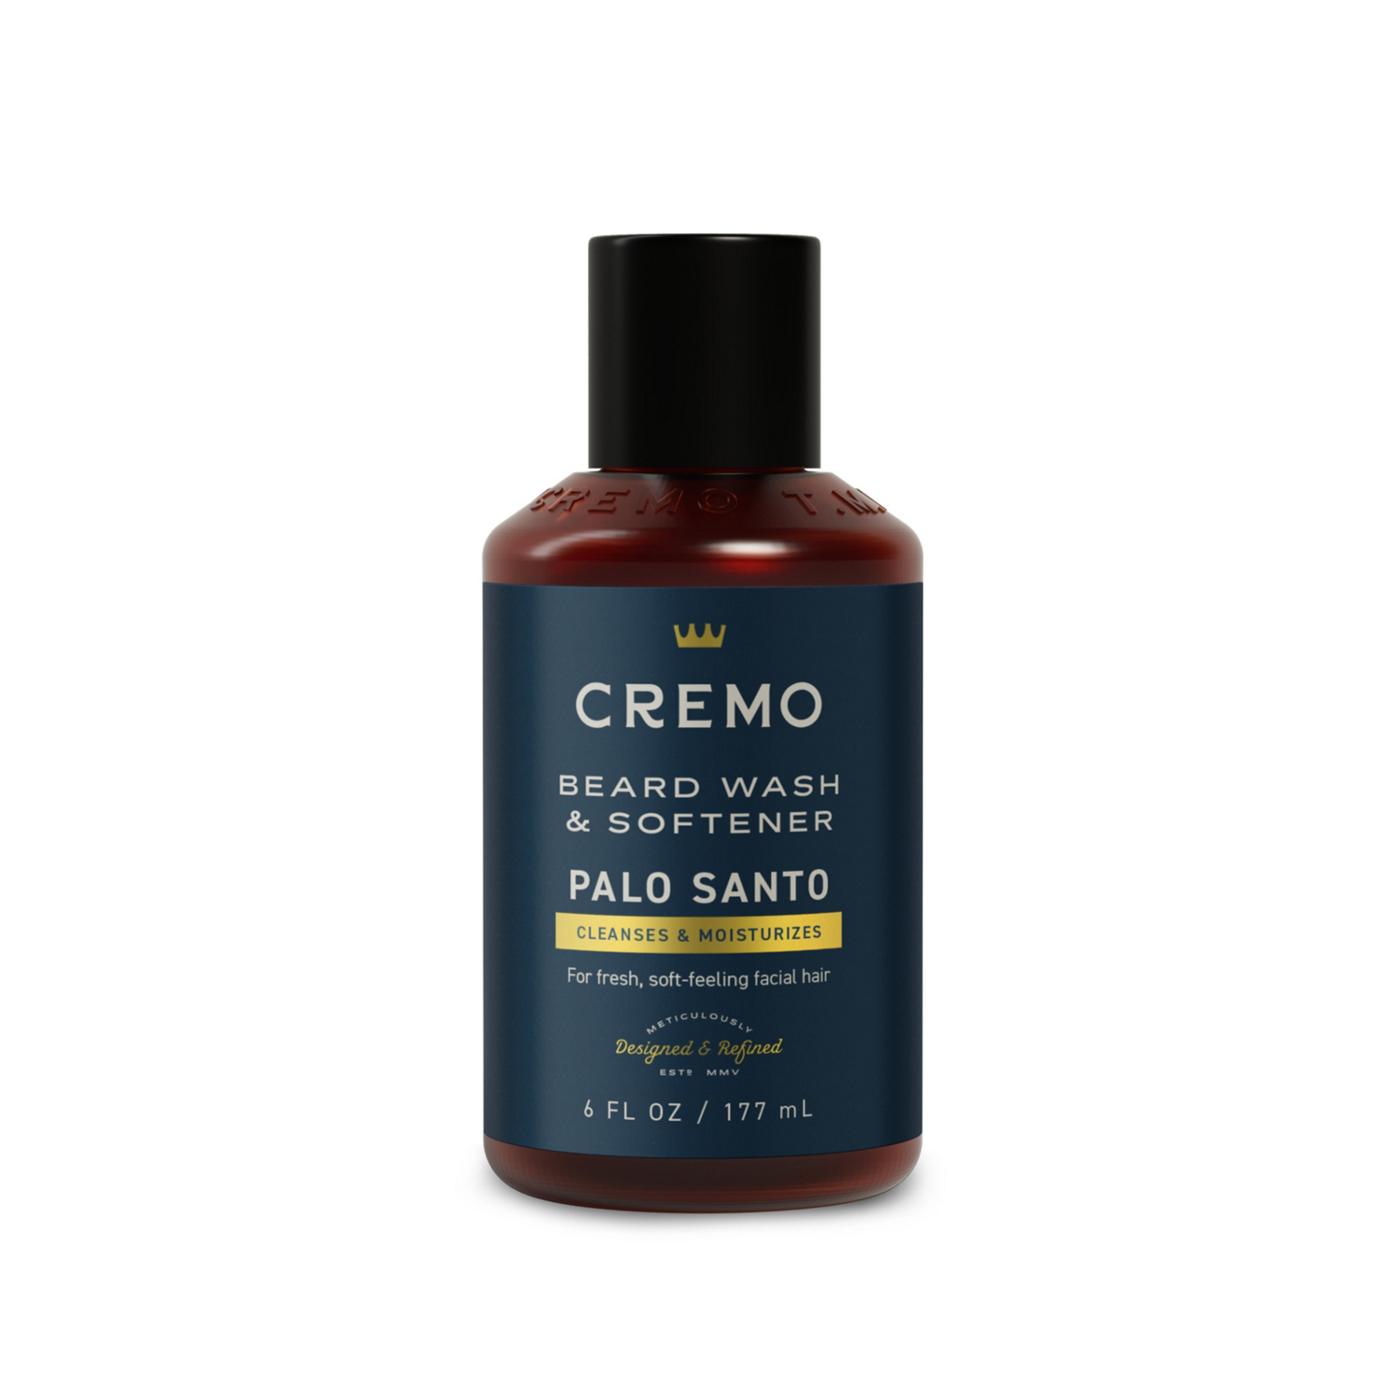 Cremo Beard Wash & Softener Palo Santo; image 1 of 7